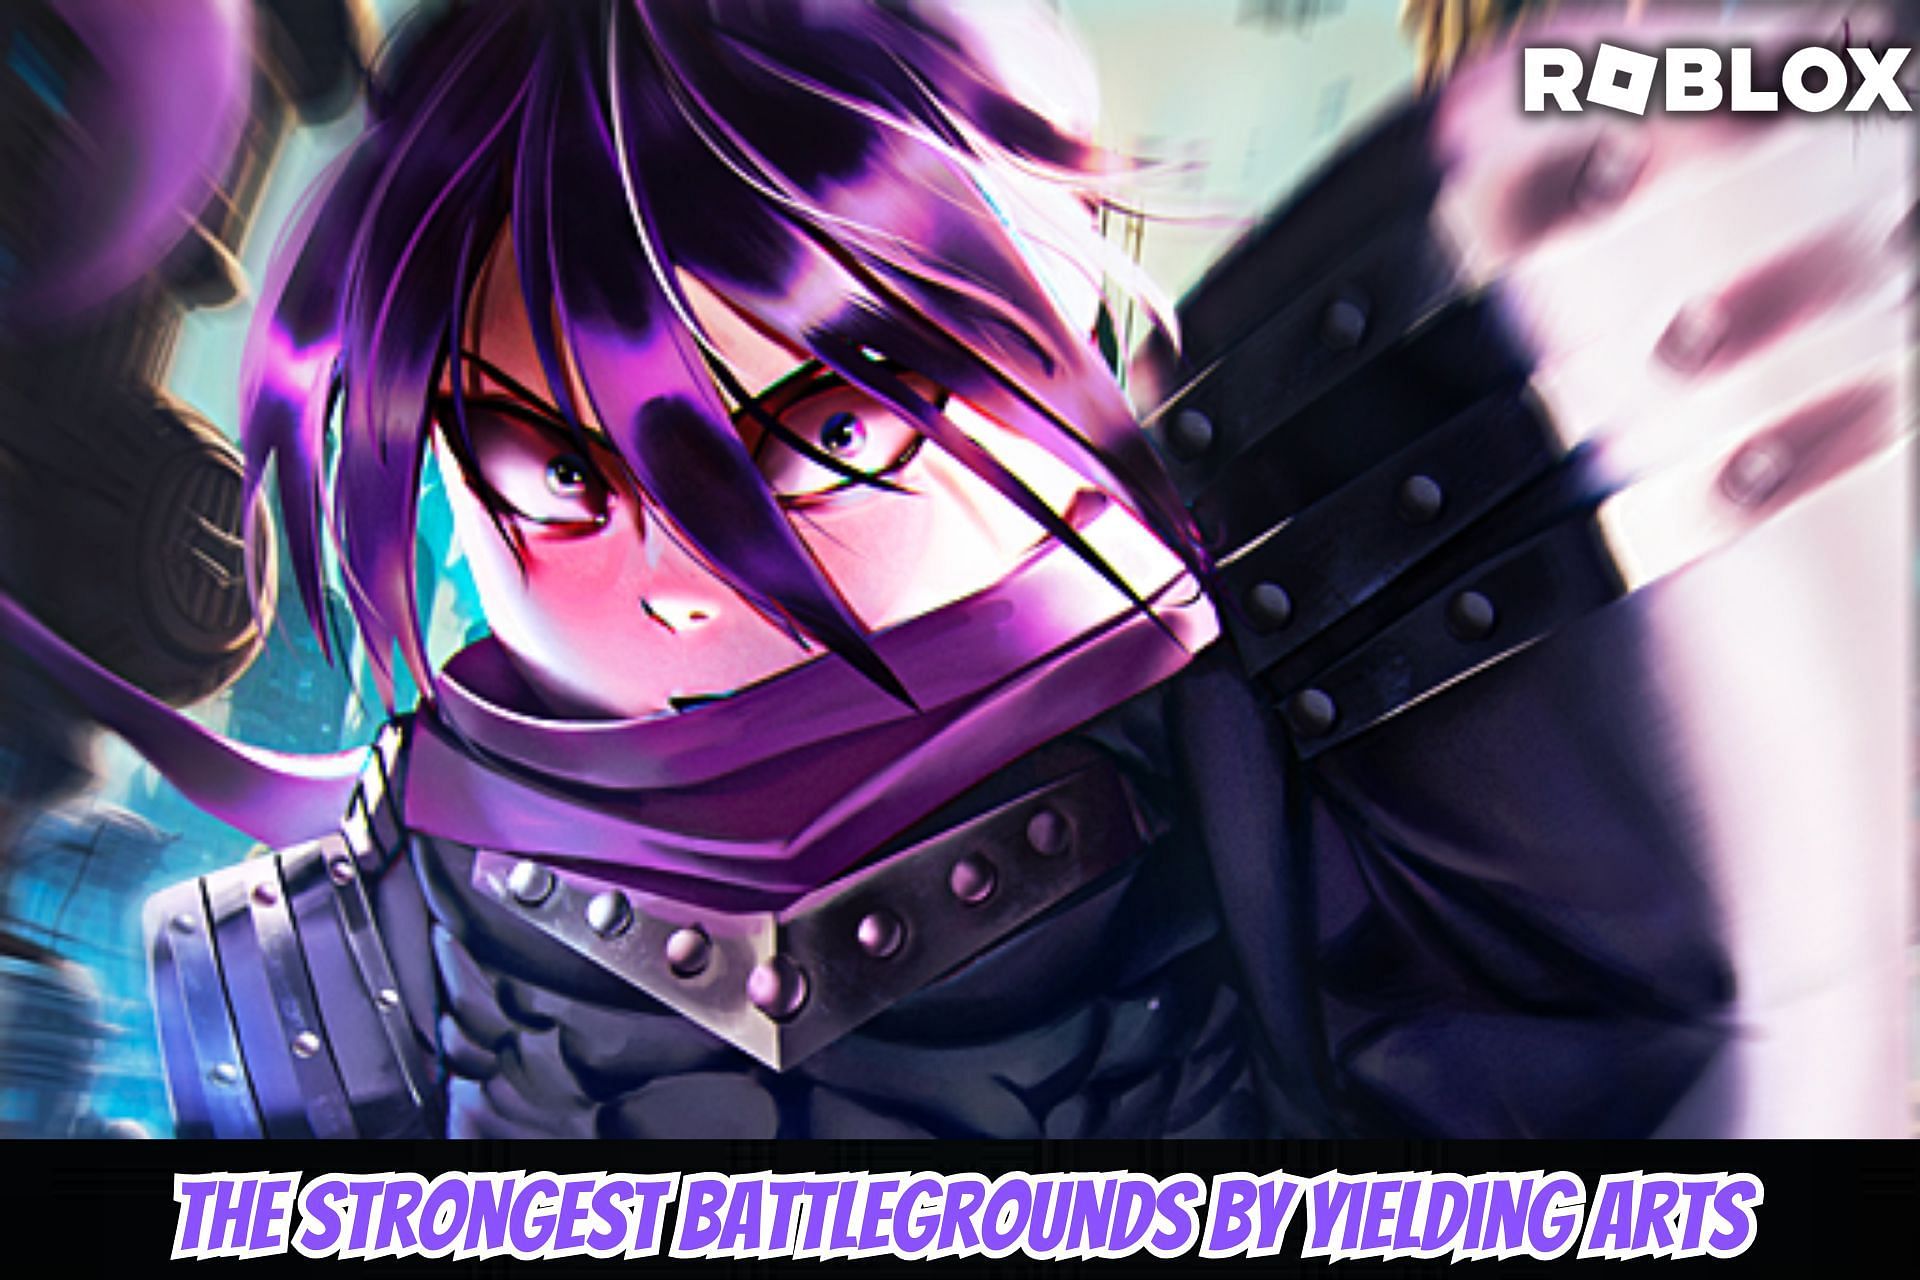 The Strongest Battlegrounds - Roblox